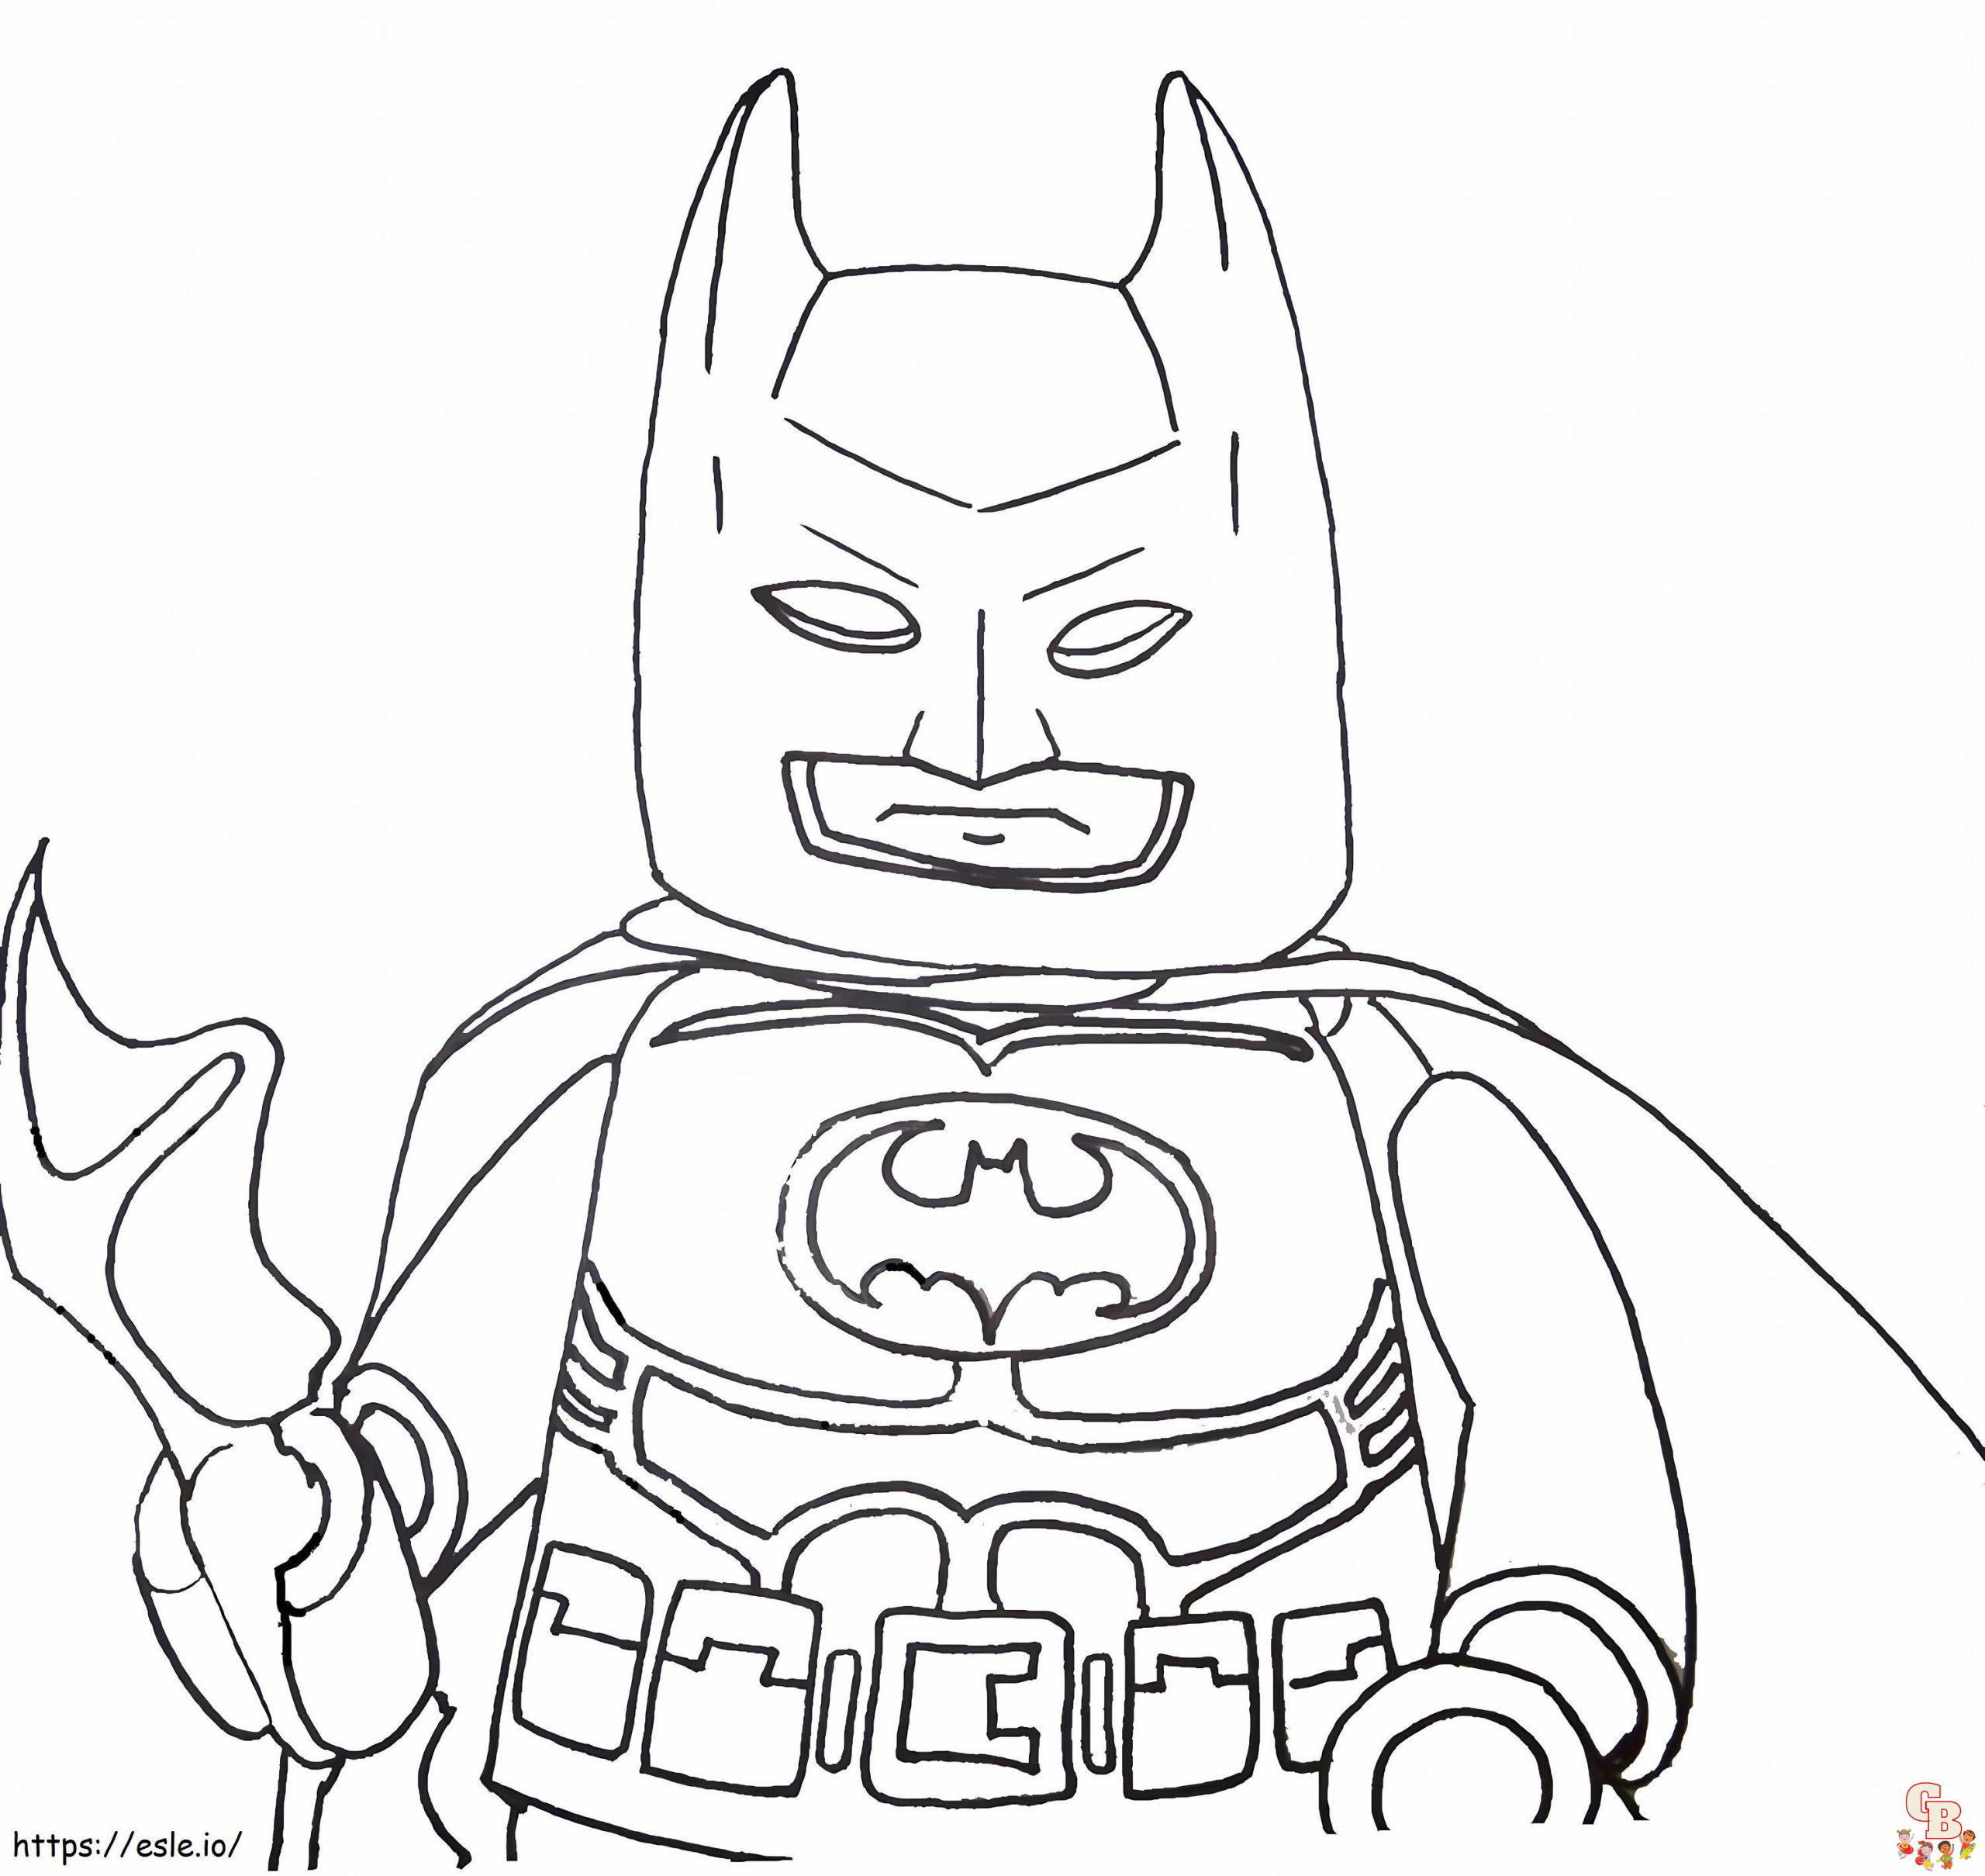 Coloriage LEGO Batman